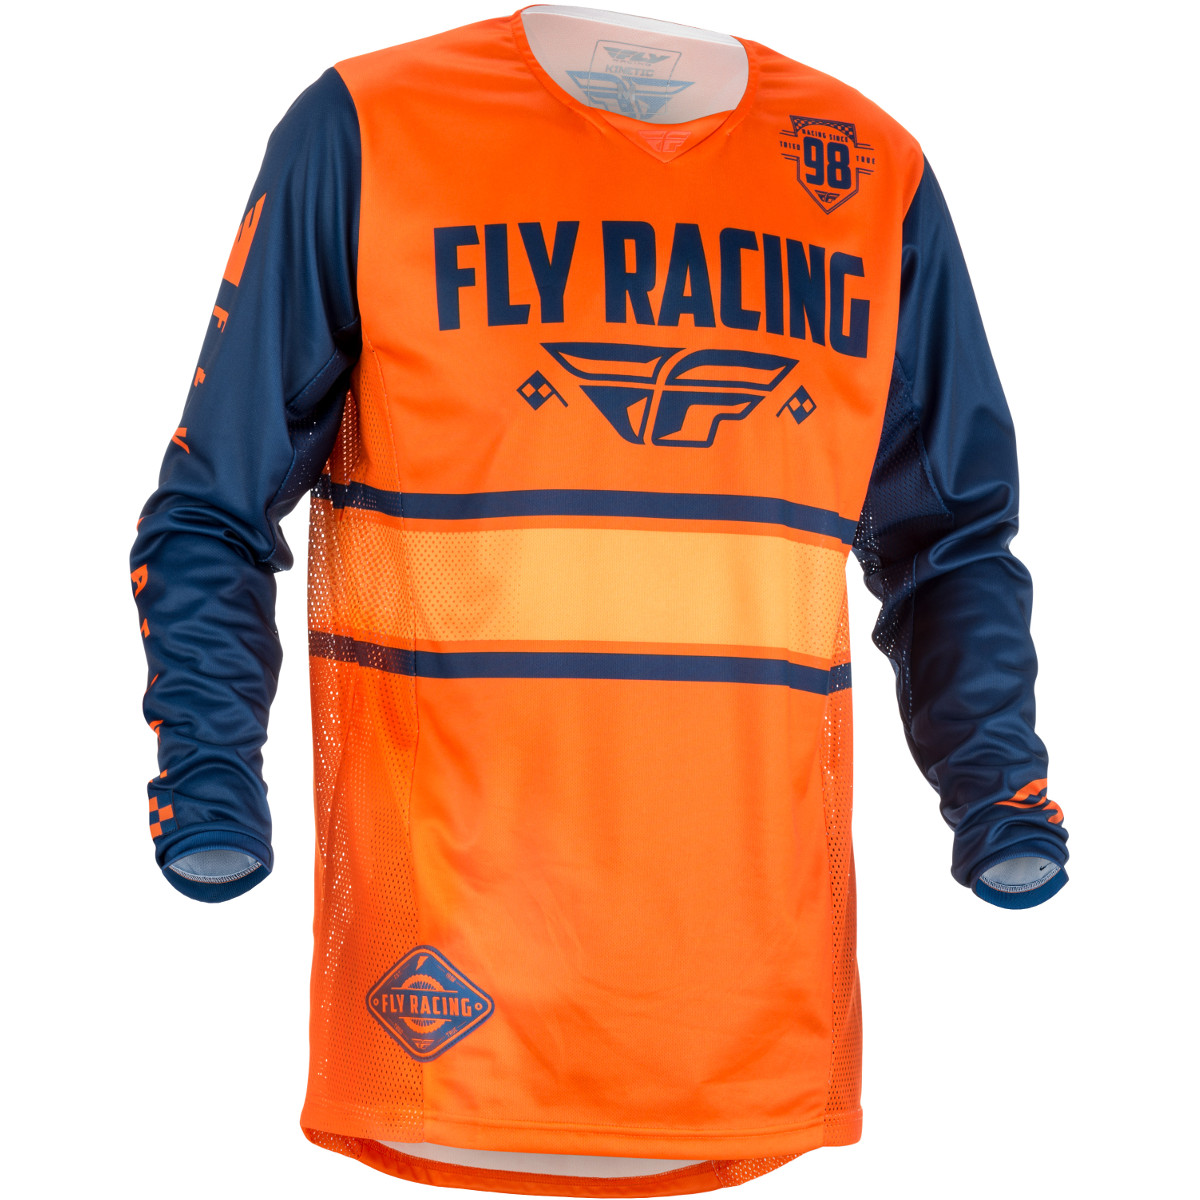 Fly Racing Kids Jersey Kinetic Era Orange/Navy